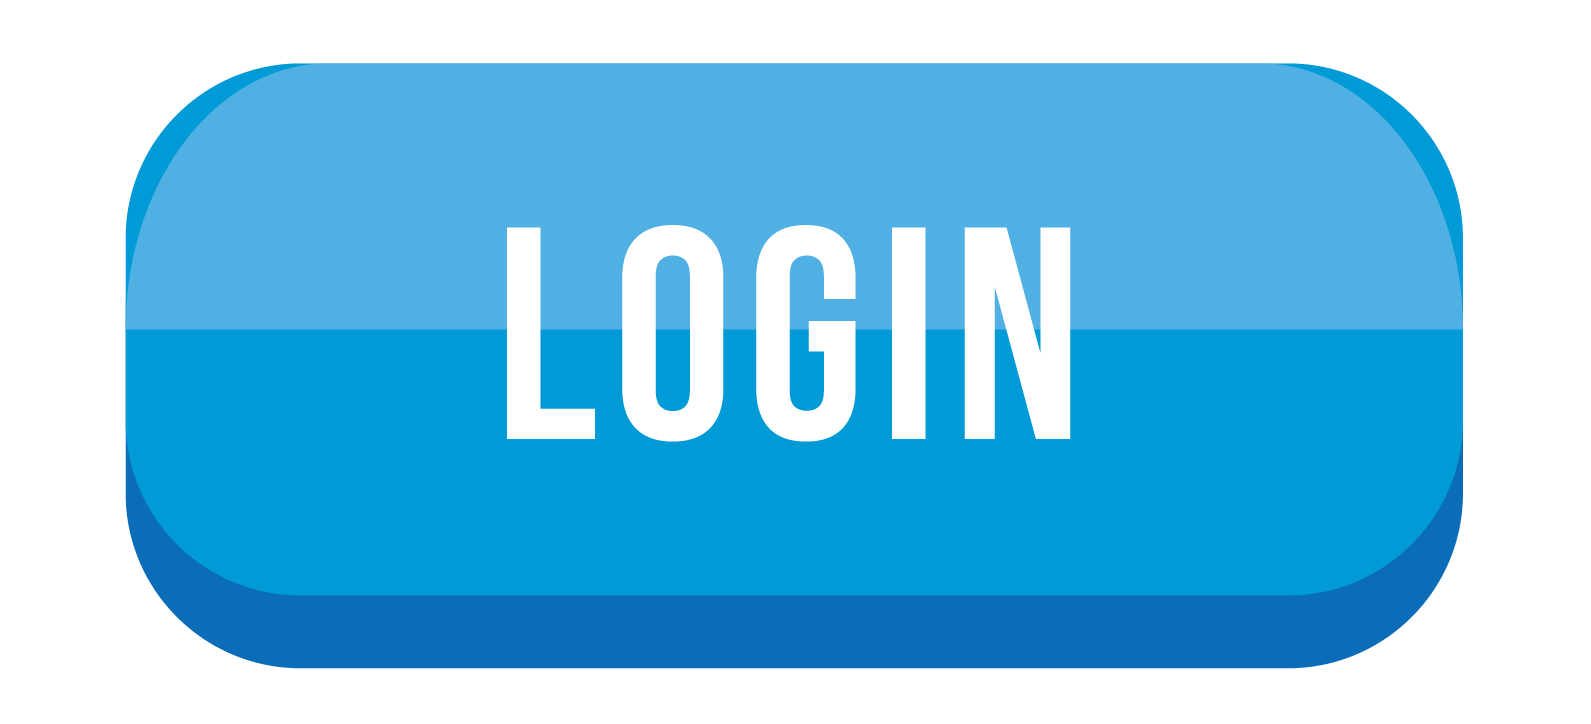 Login PNG Images Transparent Background | PNG Play